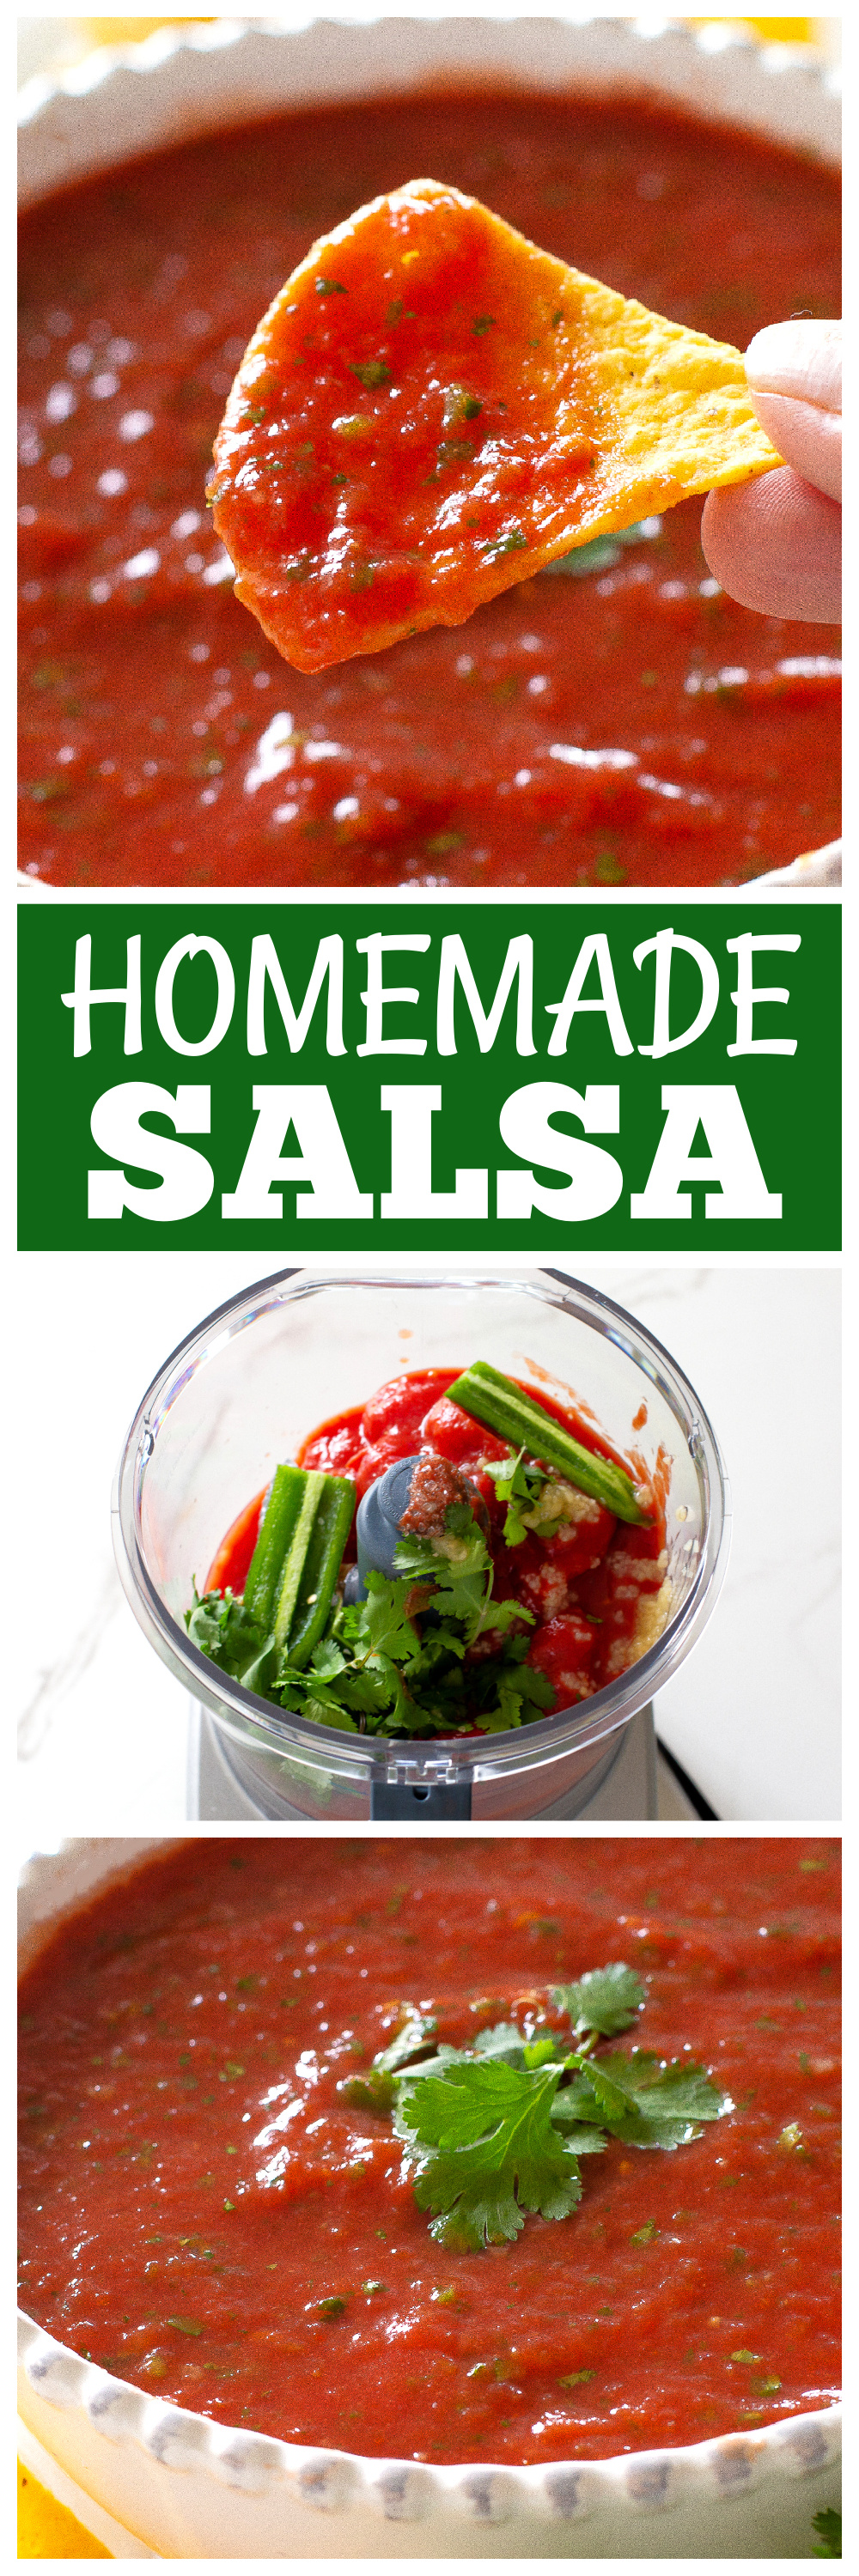 Homemade Salsa in a white bowl